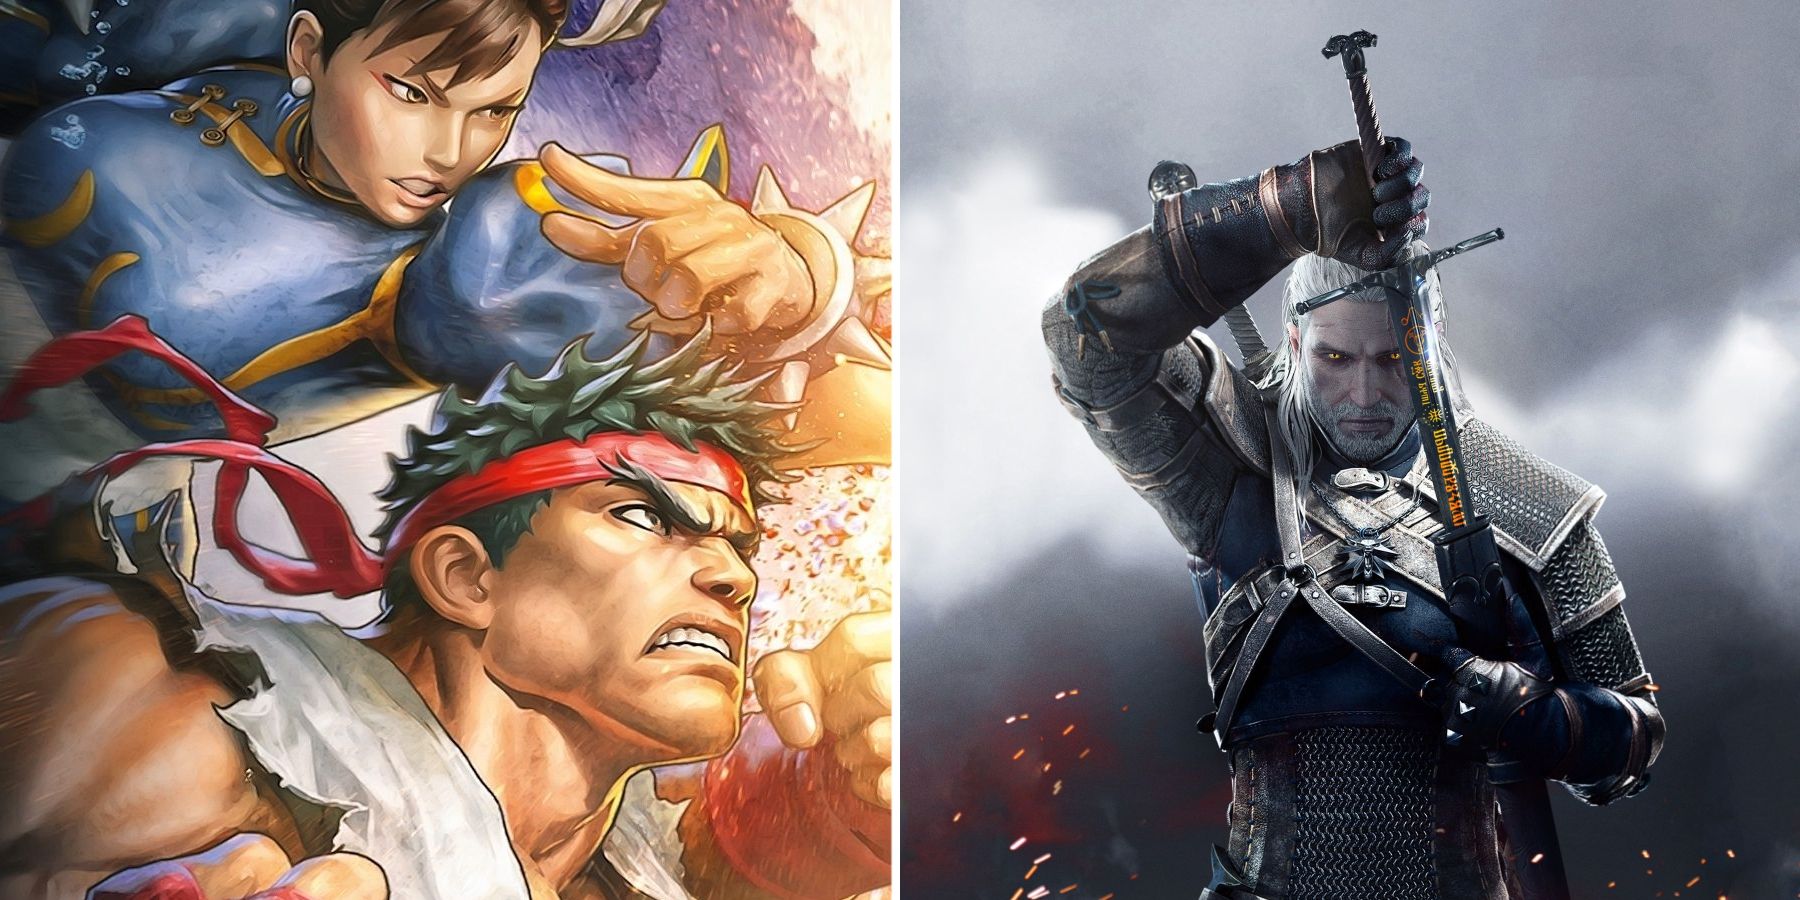 Ryu, Chun-Li, and Geralt